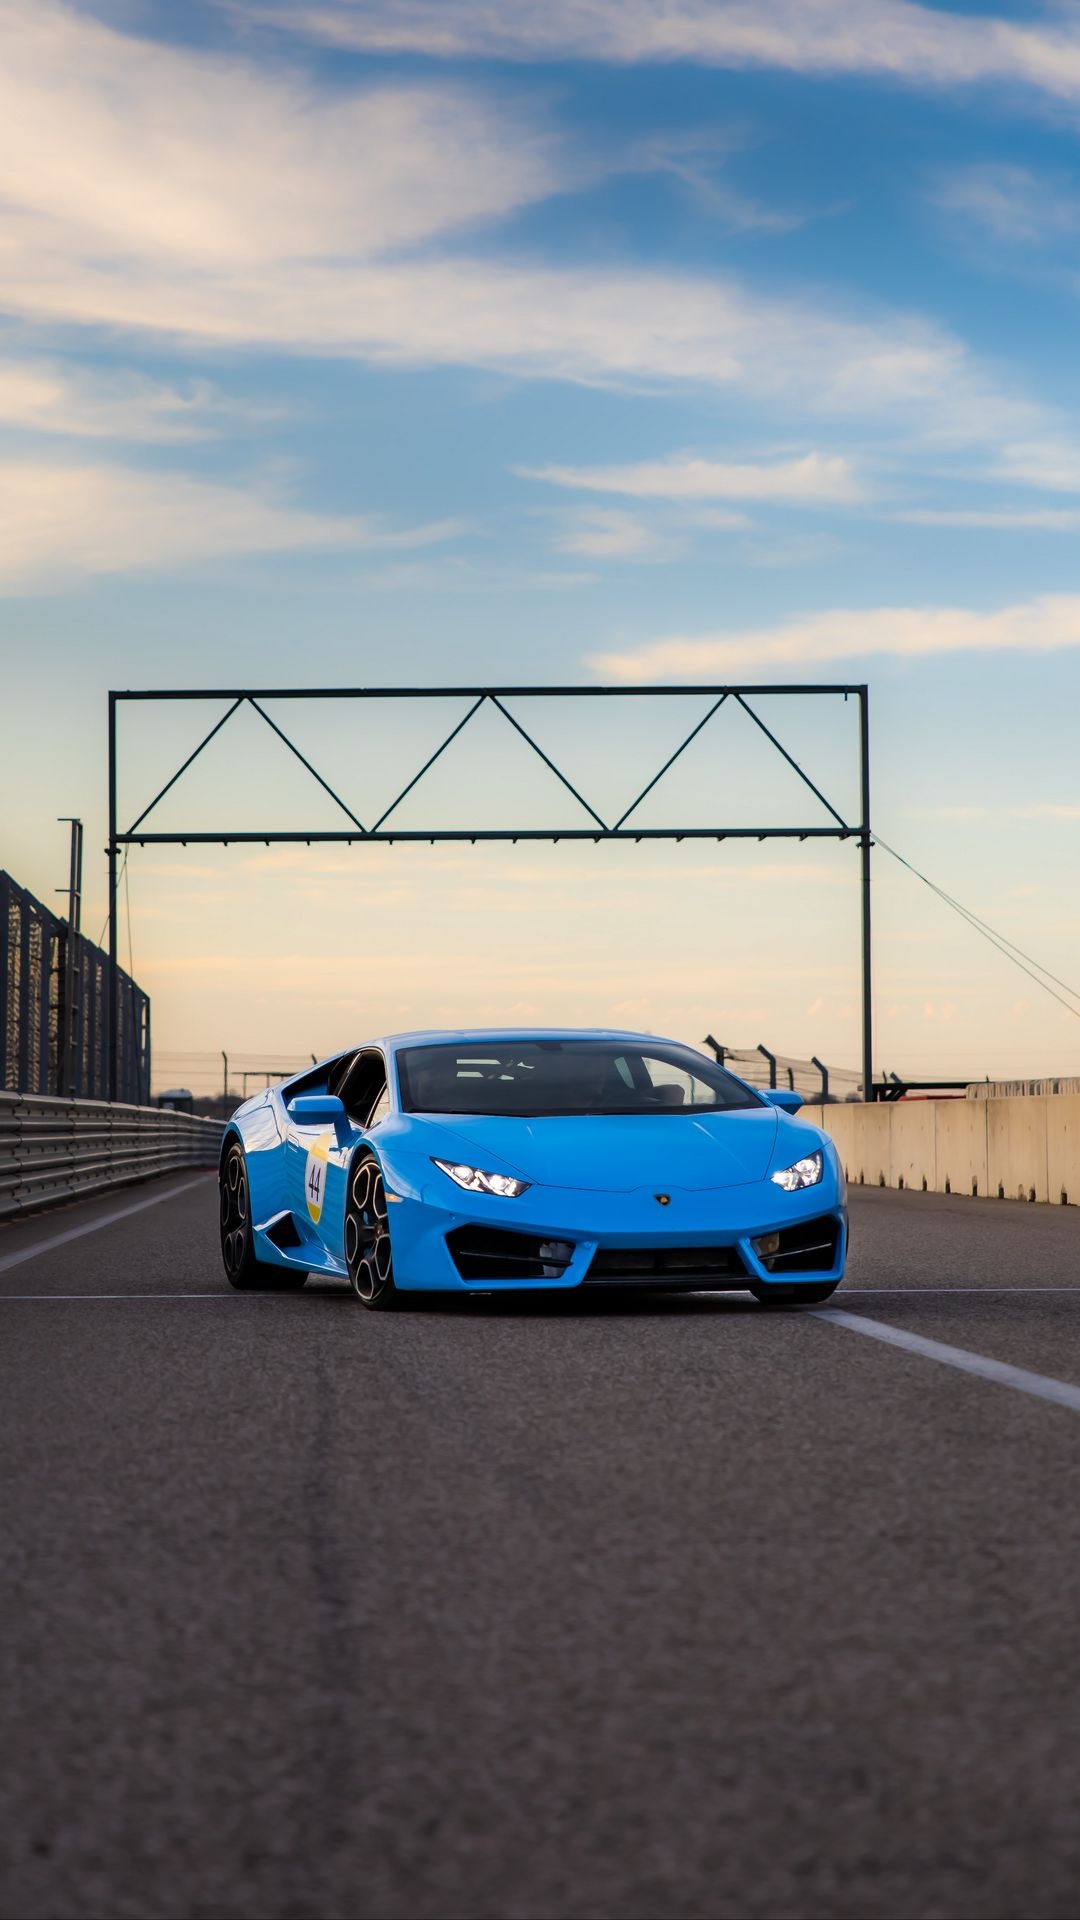 Lamborghini Huracan background wallpapers, Free download, 1080x1920 Full HD Handy